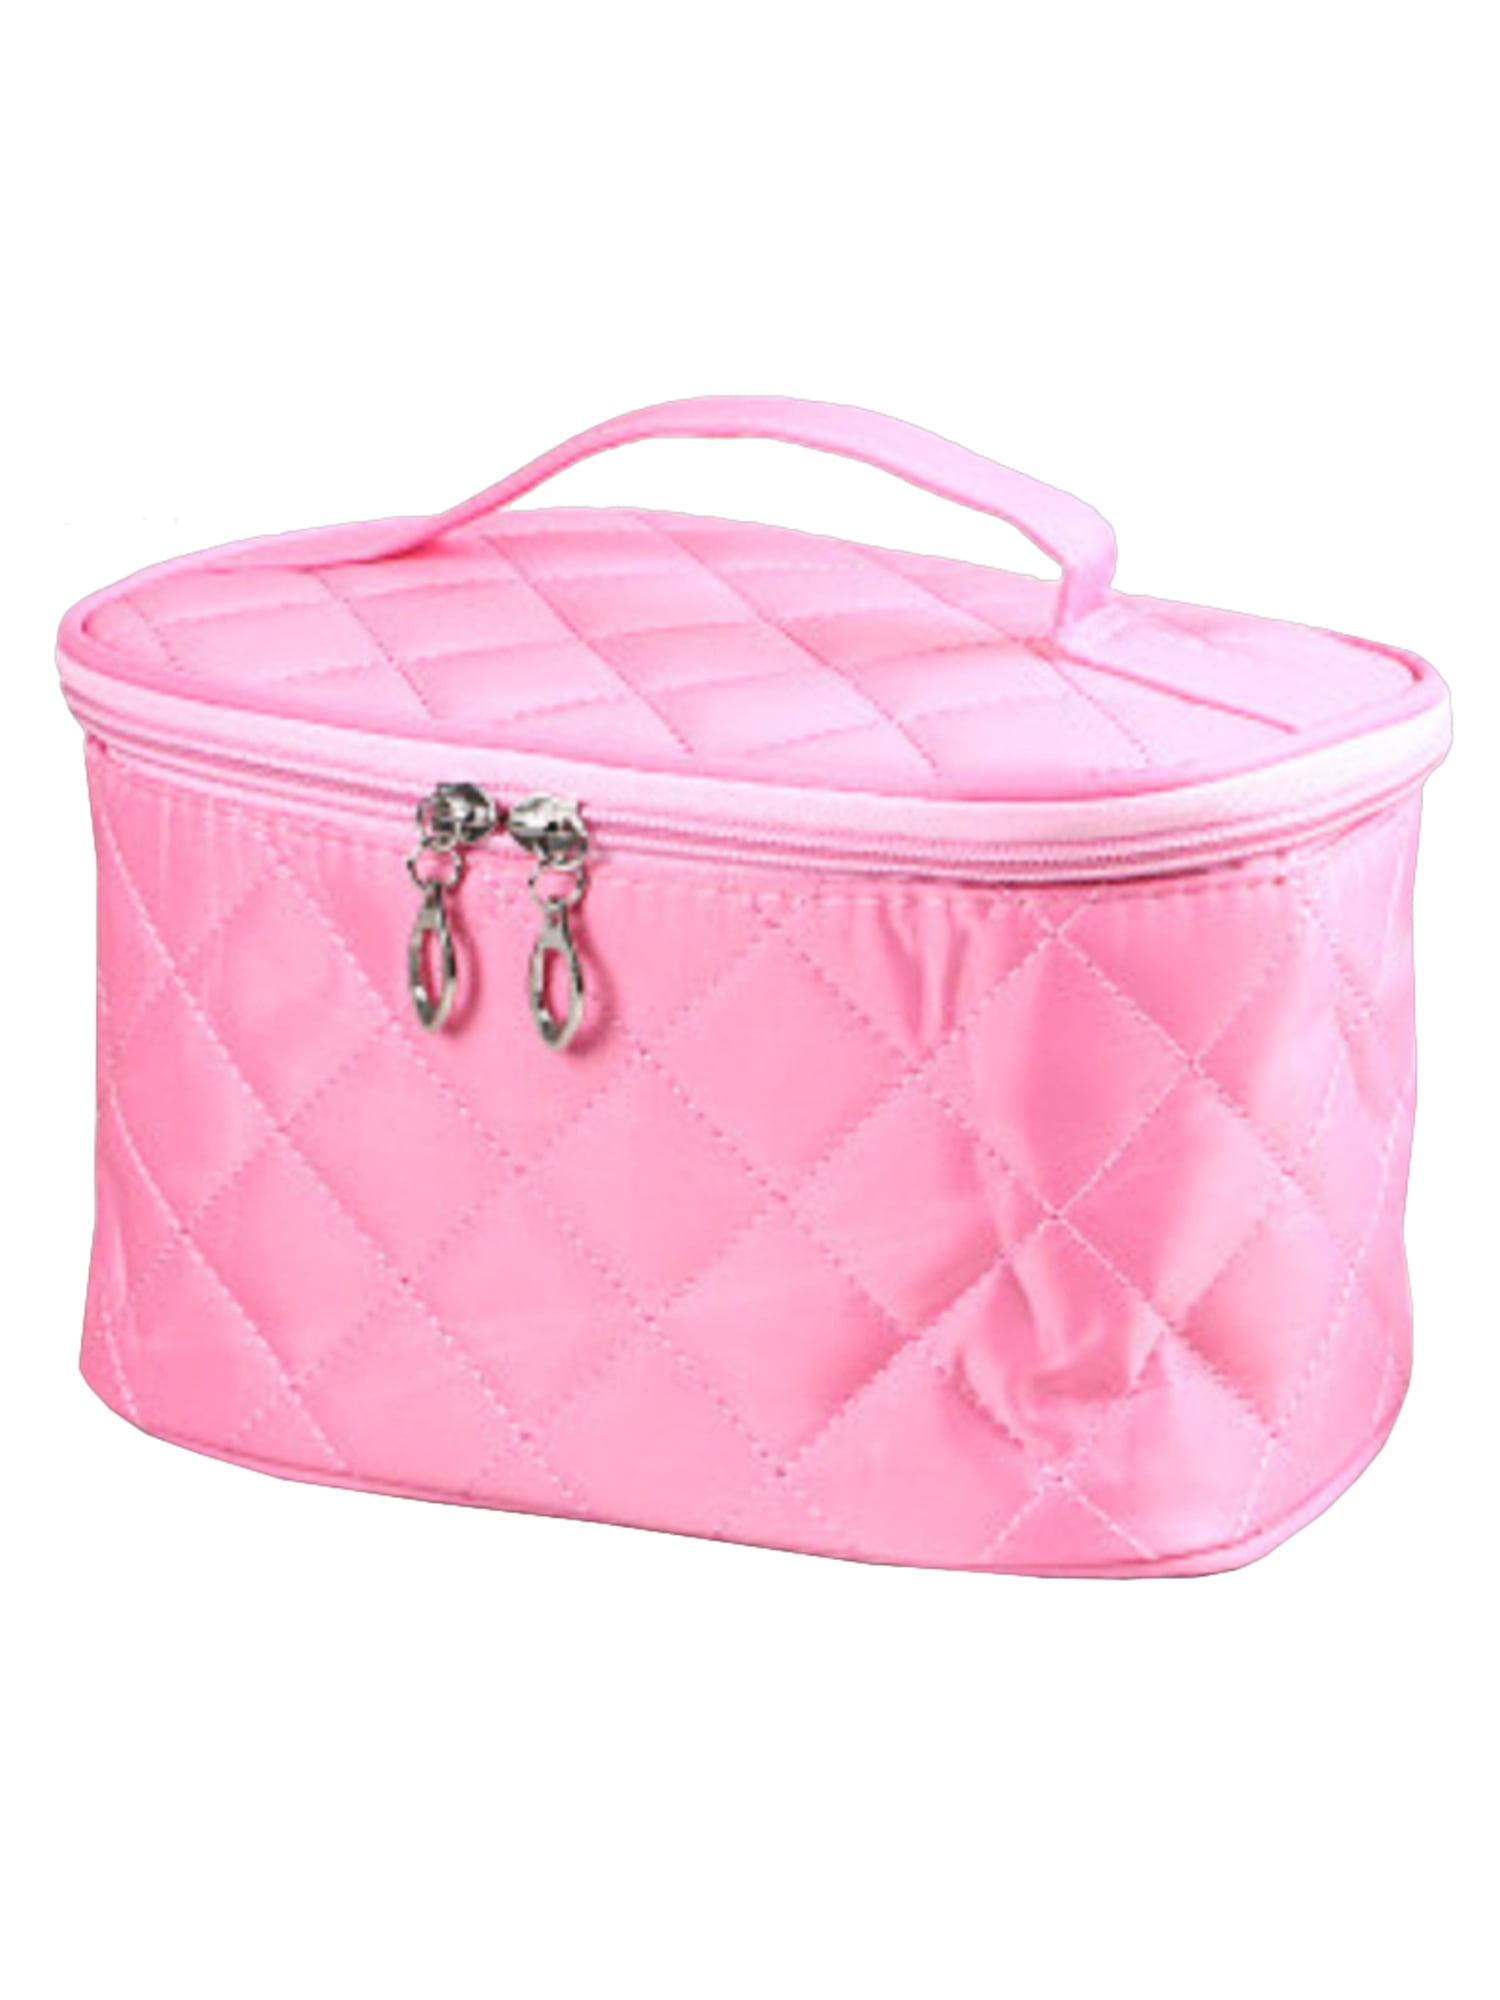 La Women's Travel Makeup Plain Portable Cosmetic Handbag Nylon Pouch Toiletry Bag, Size: One size, Black